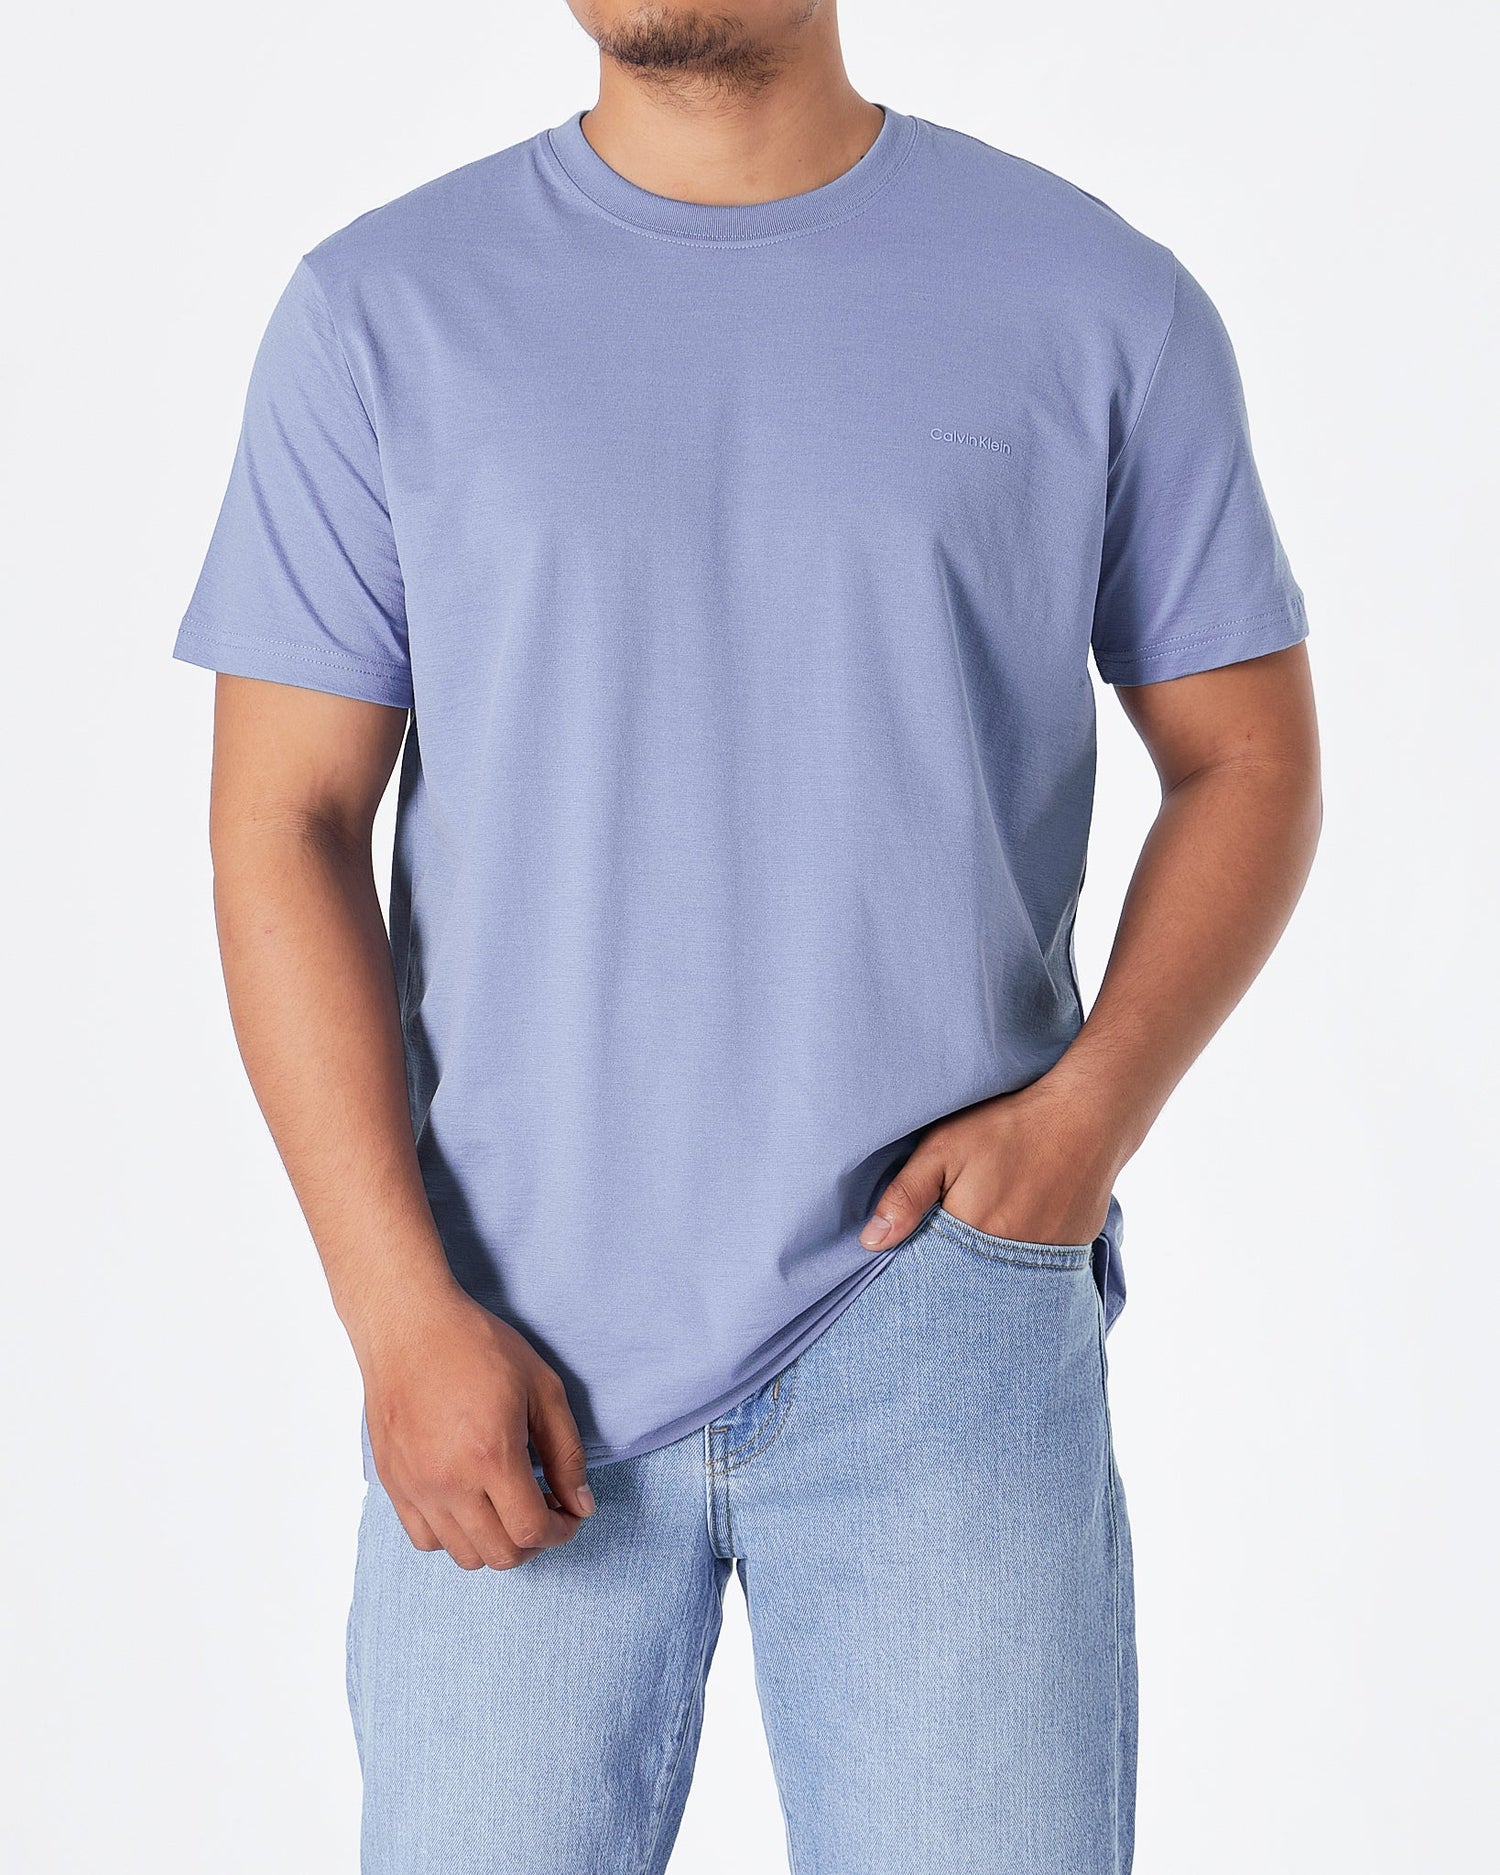 Men's plain t-shirt - blue melange S1390